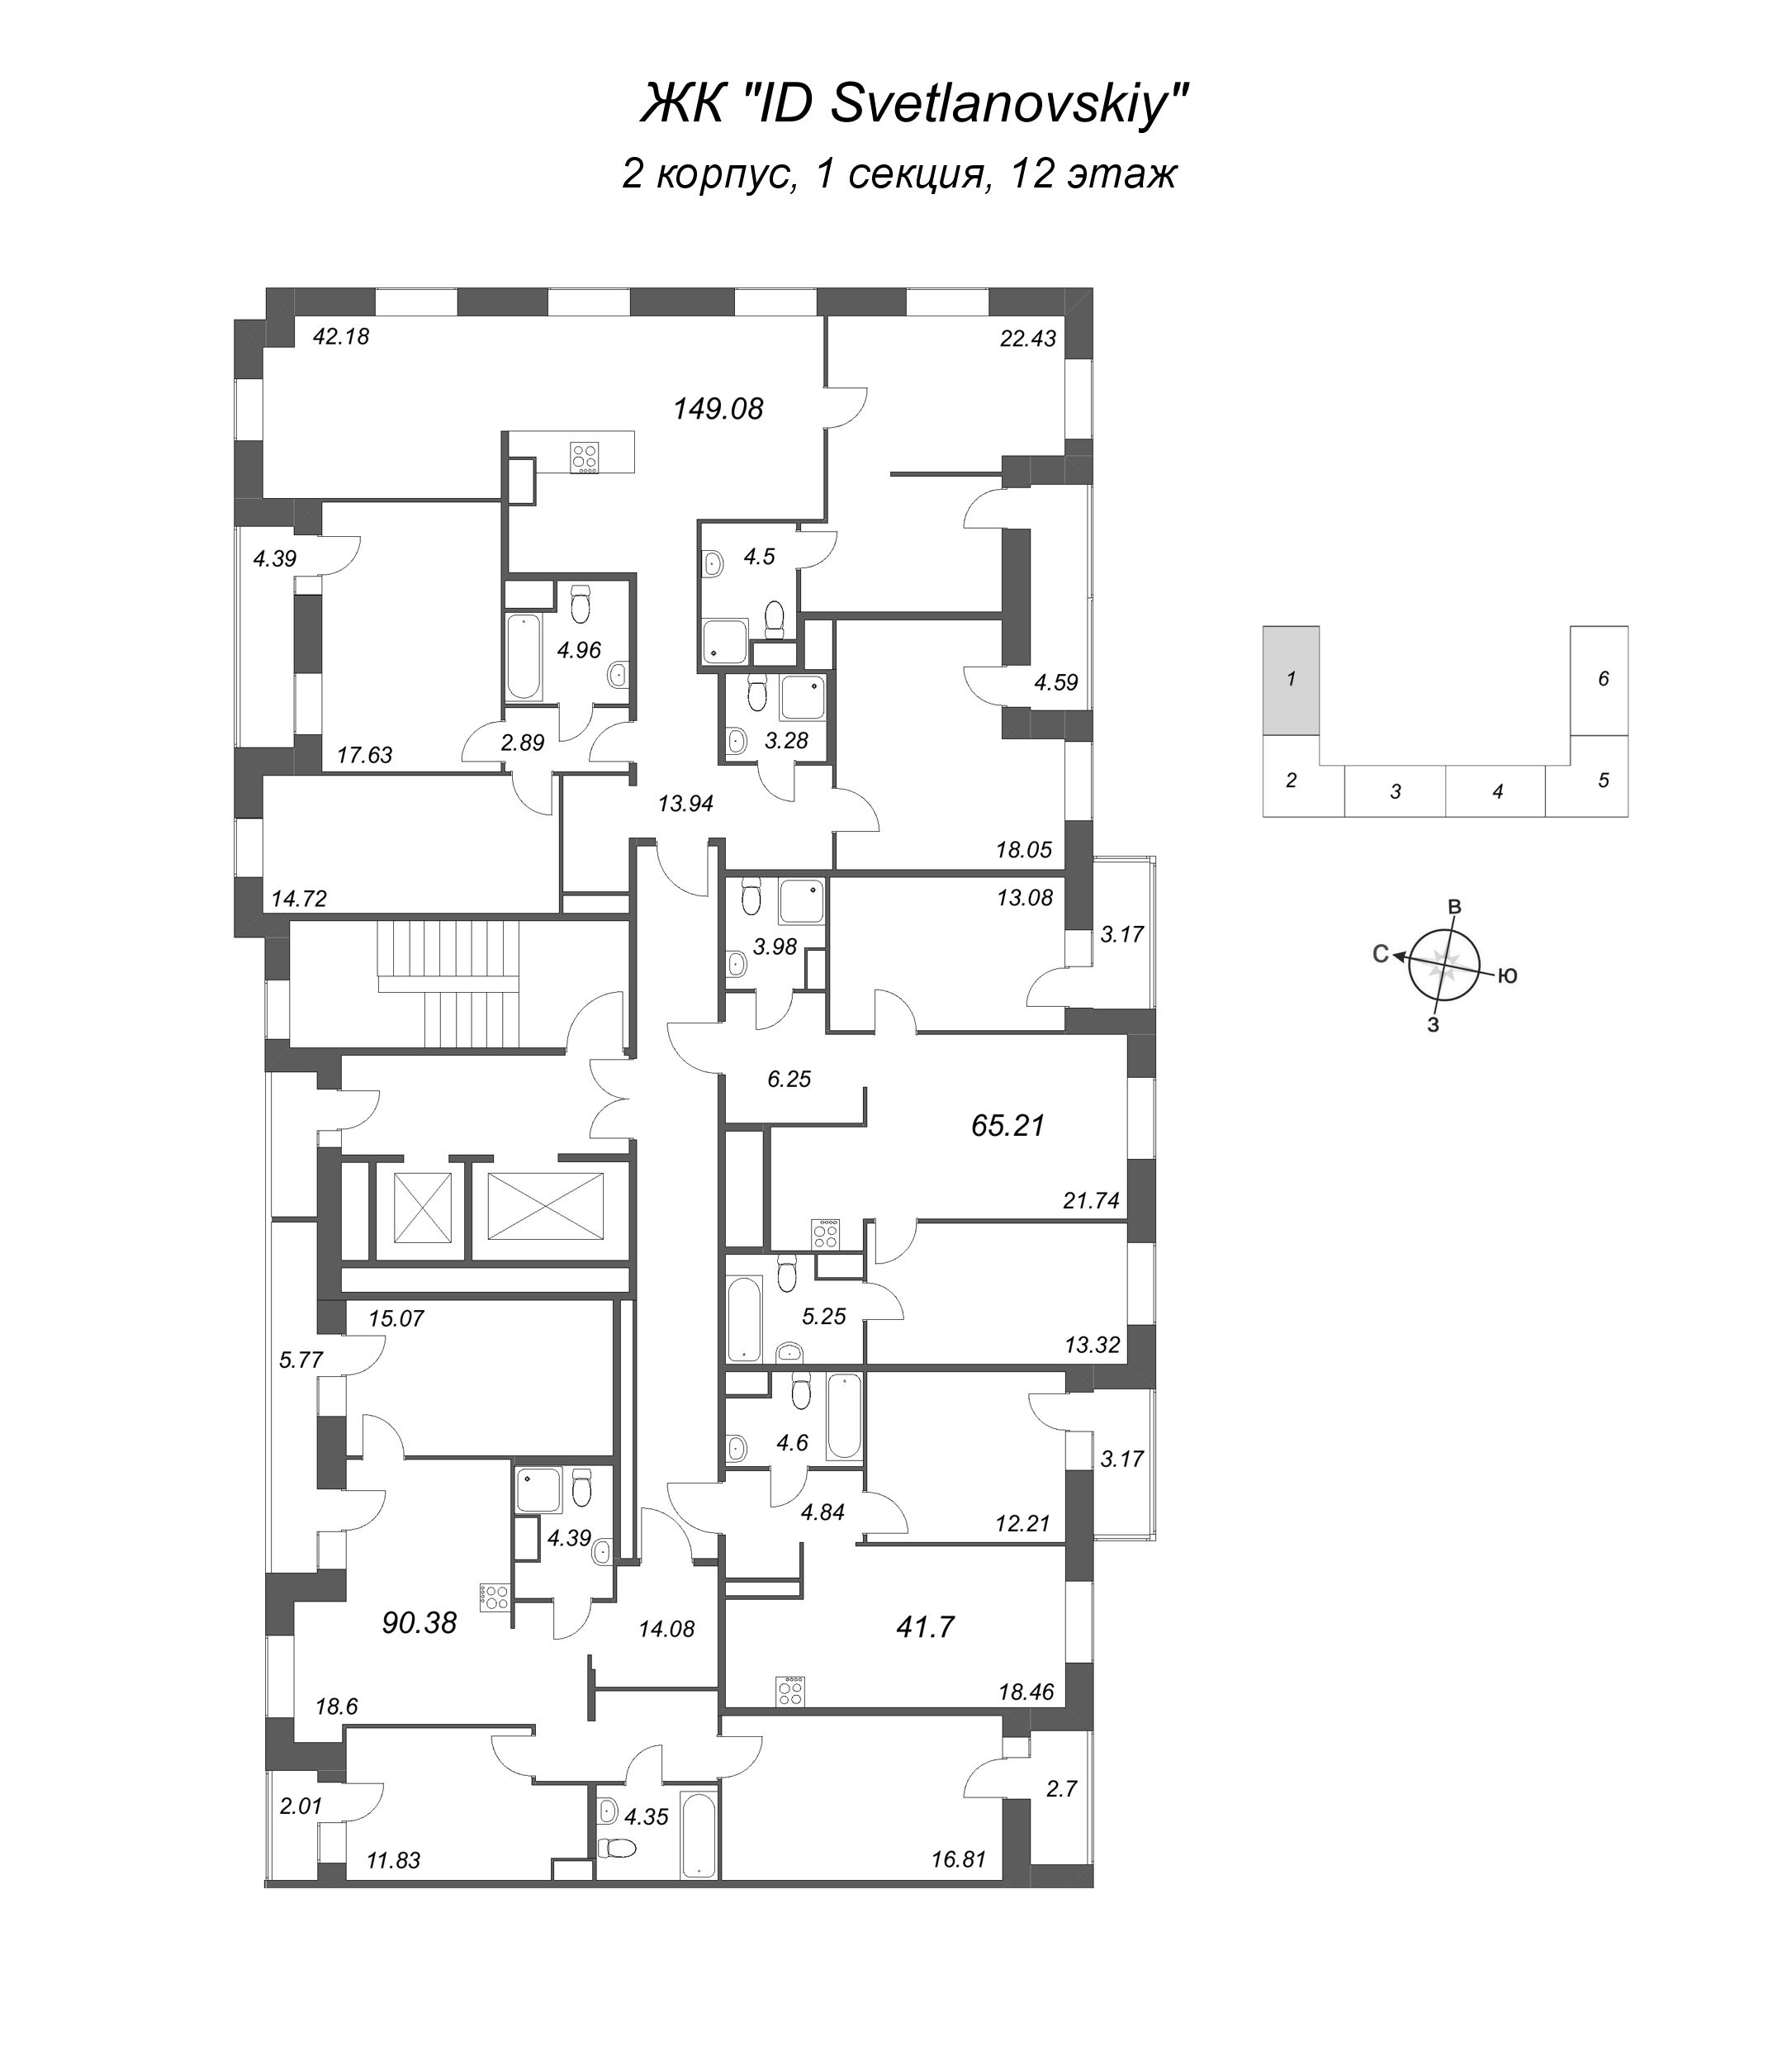 4-комнатная (Евро) квартира, 90.38 м² - планировка этажа